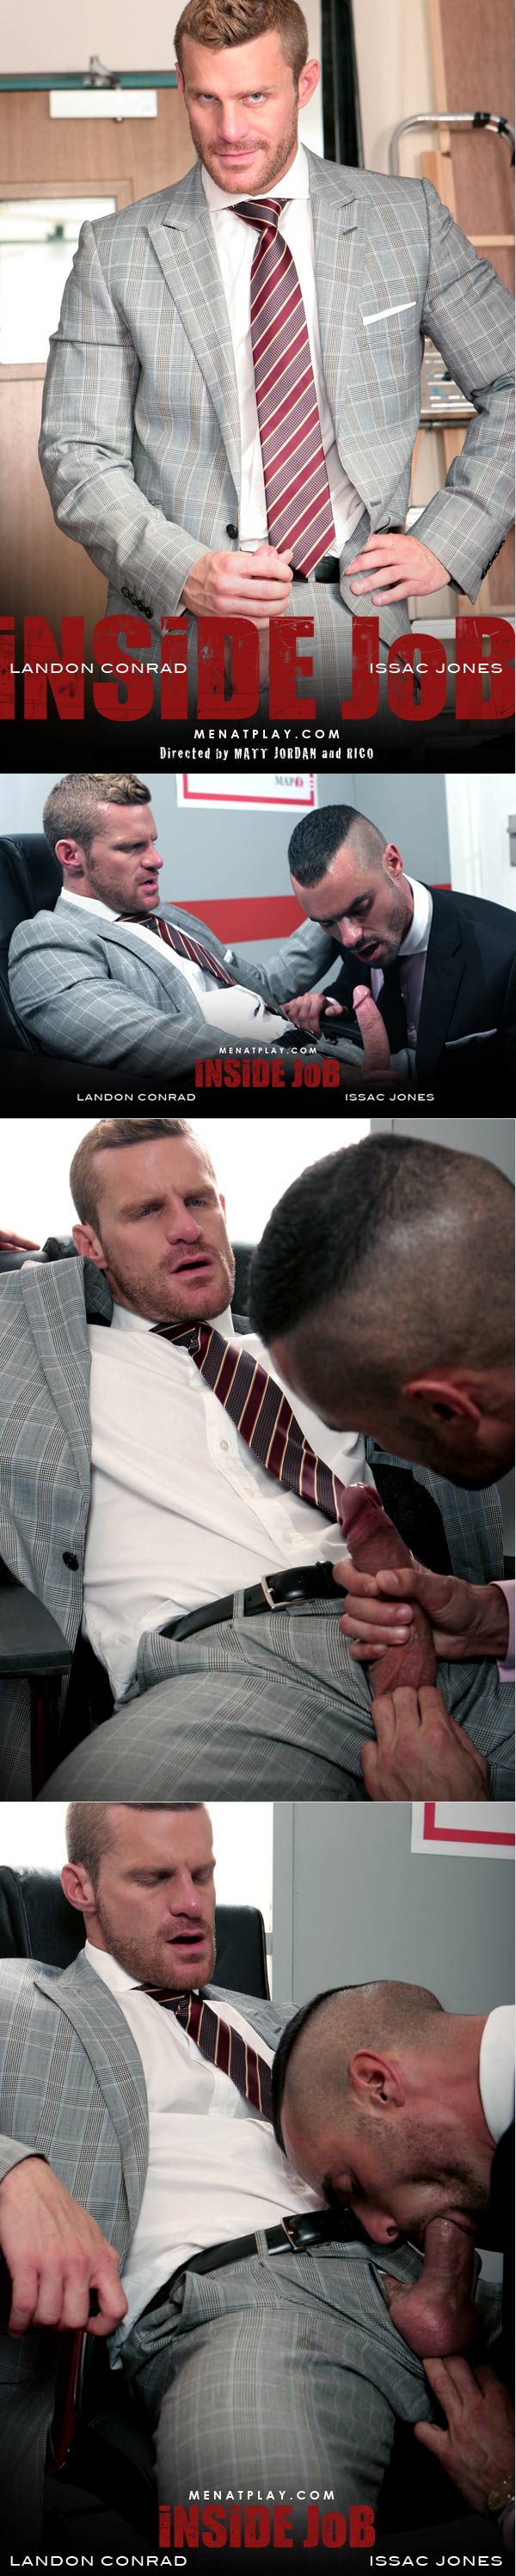 Inside Job (Starring Landon Conrad and Issac Jones) on MenAtPlay